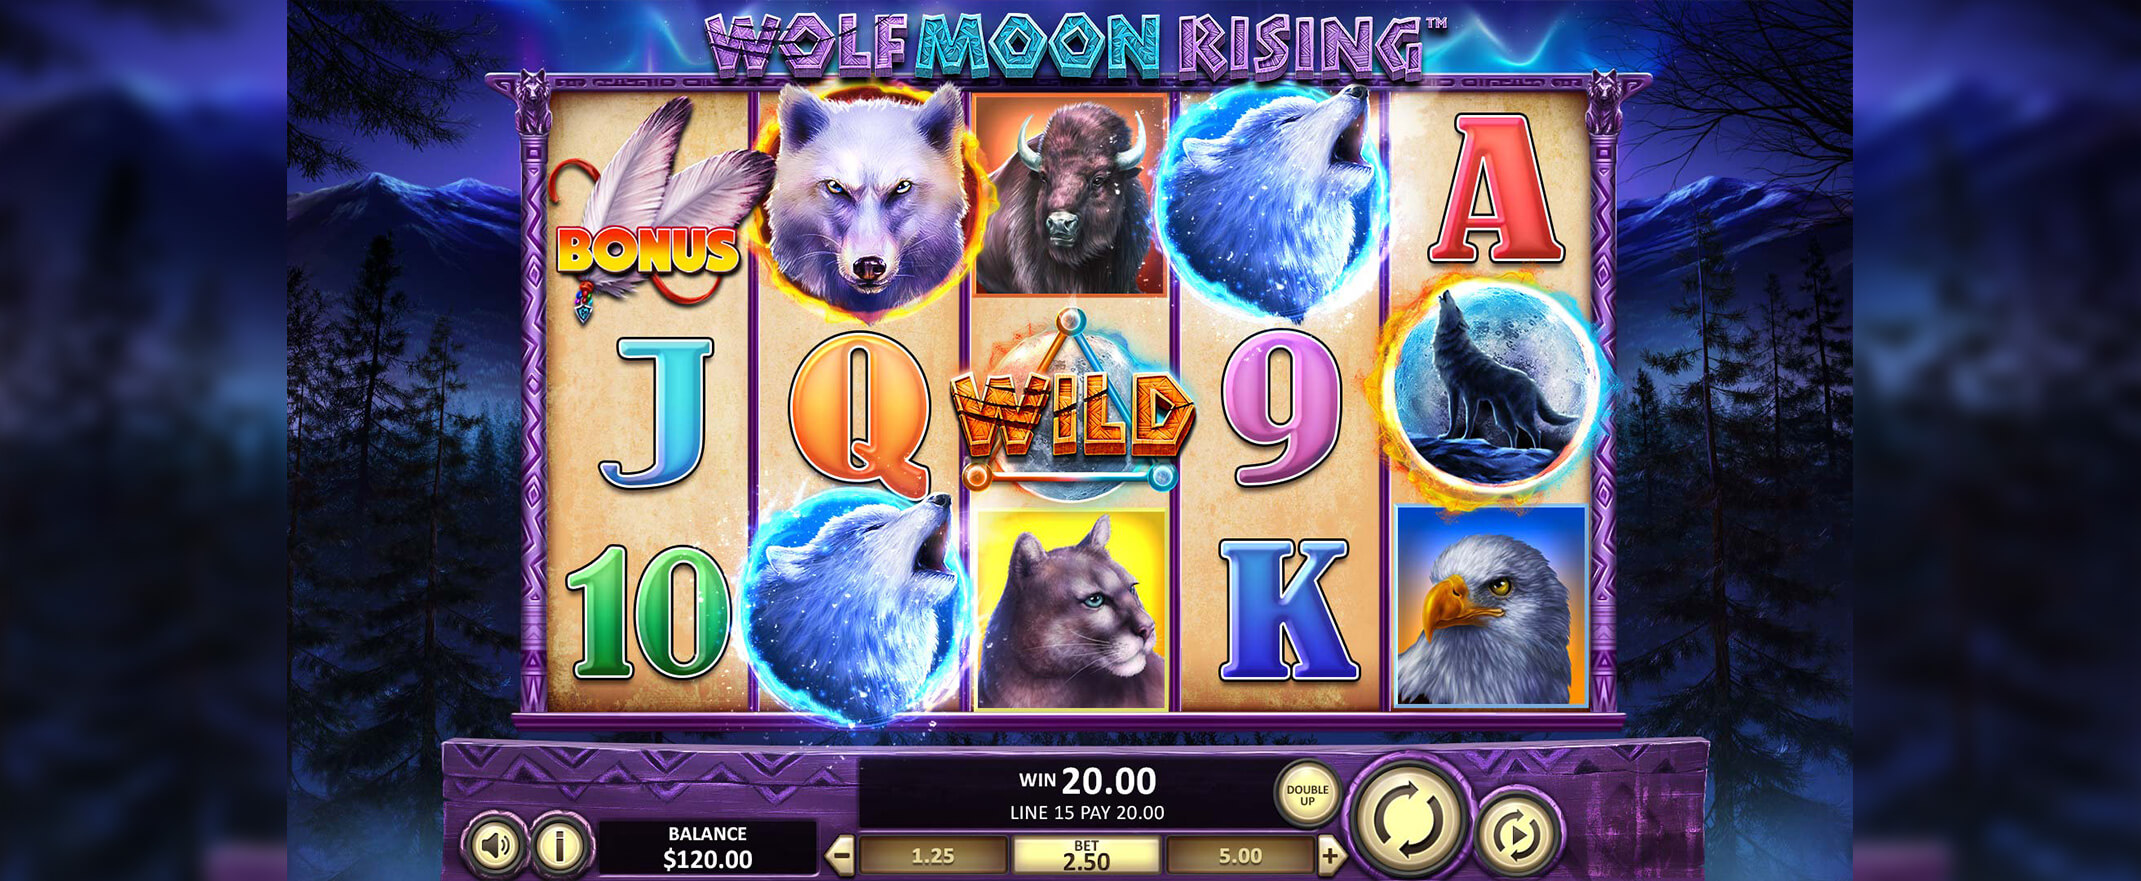 Wolf Moon Rising bonus